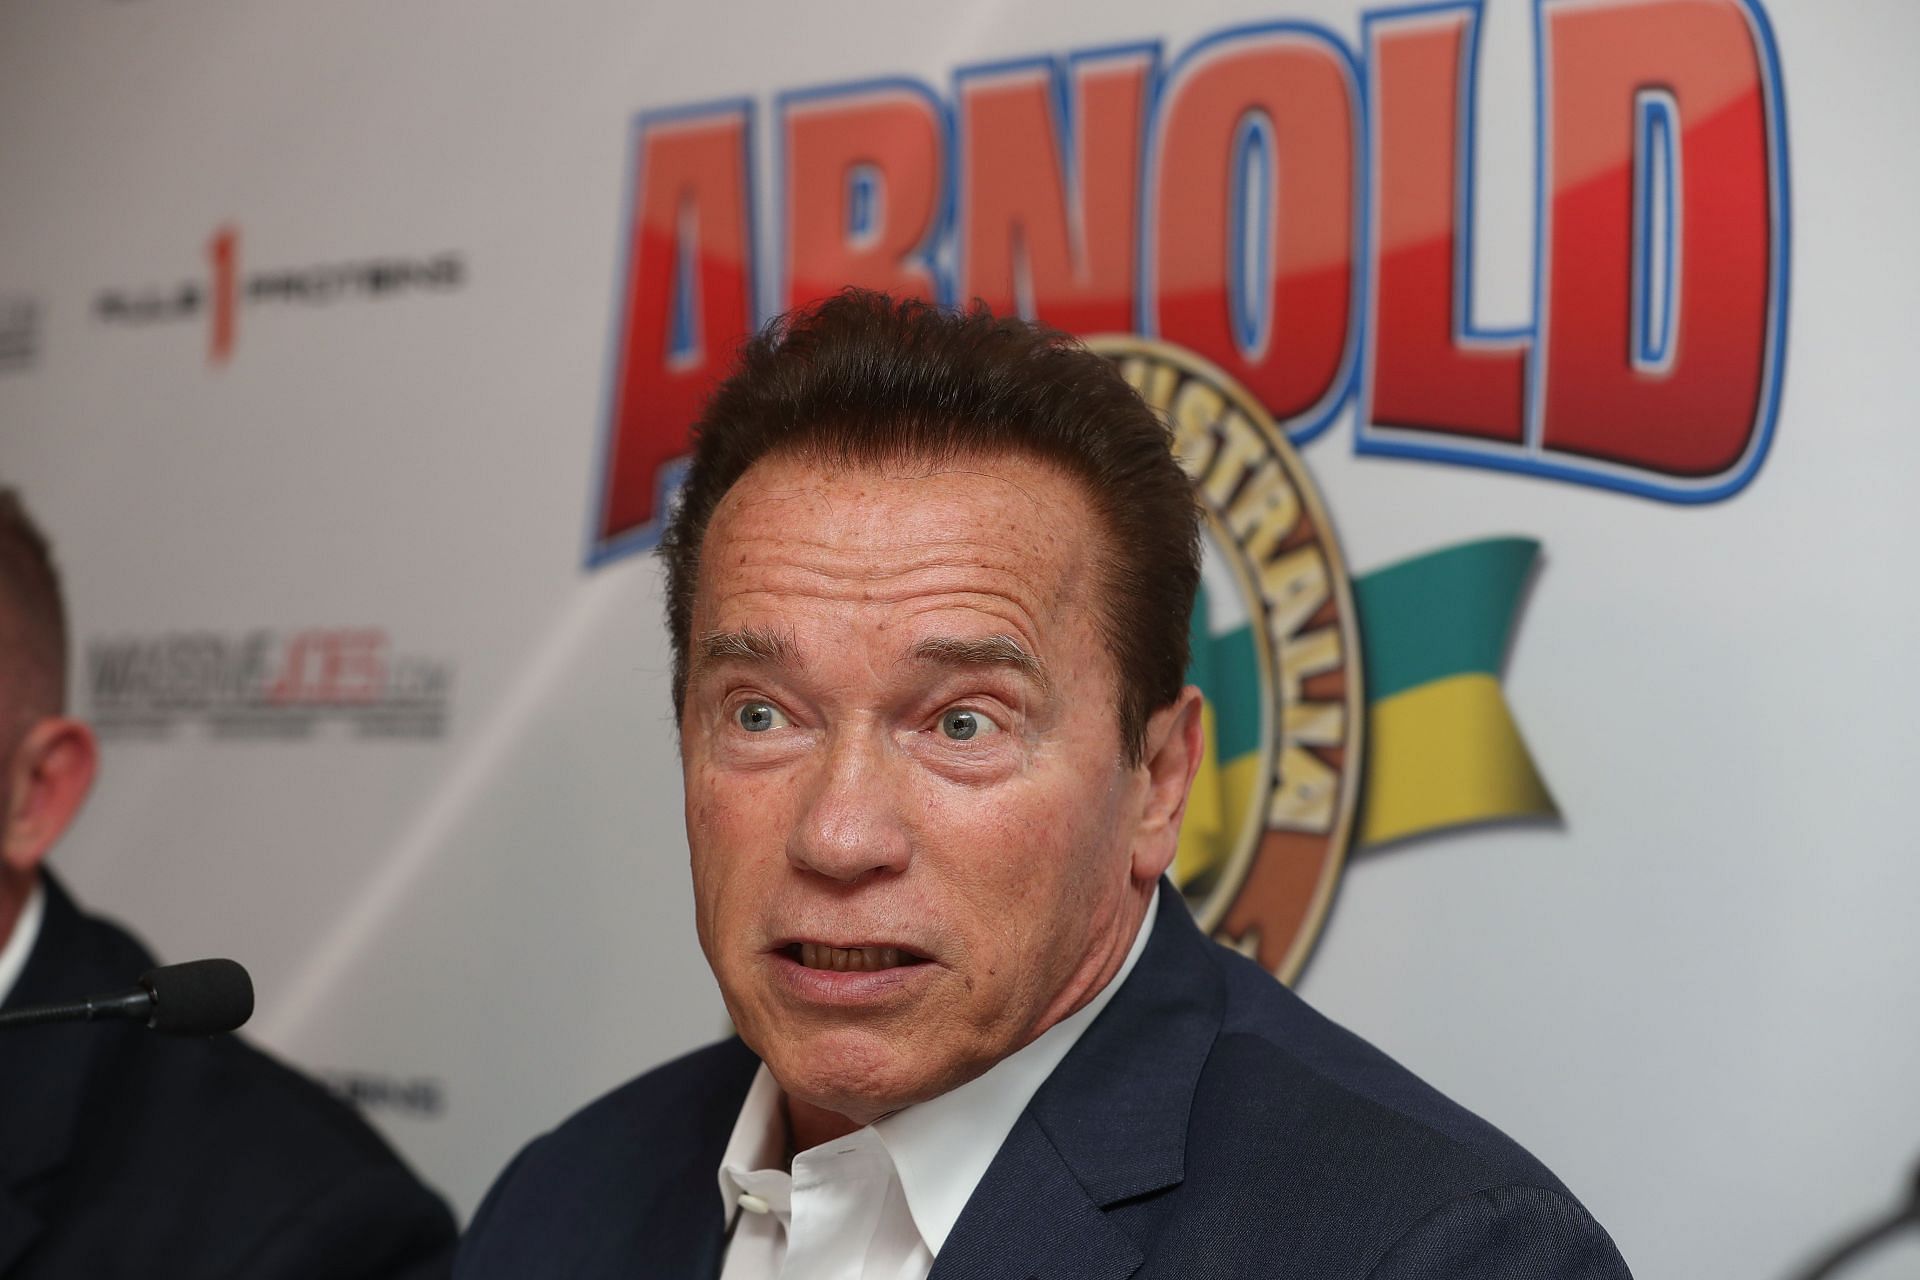 Arnold Schwarzenegger News Conference (Image via Robert Cianflone/Getty Images))